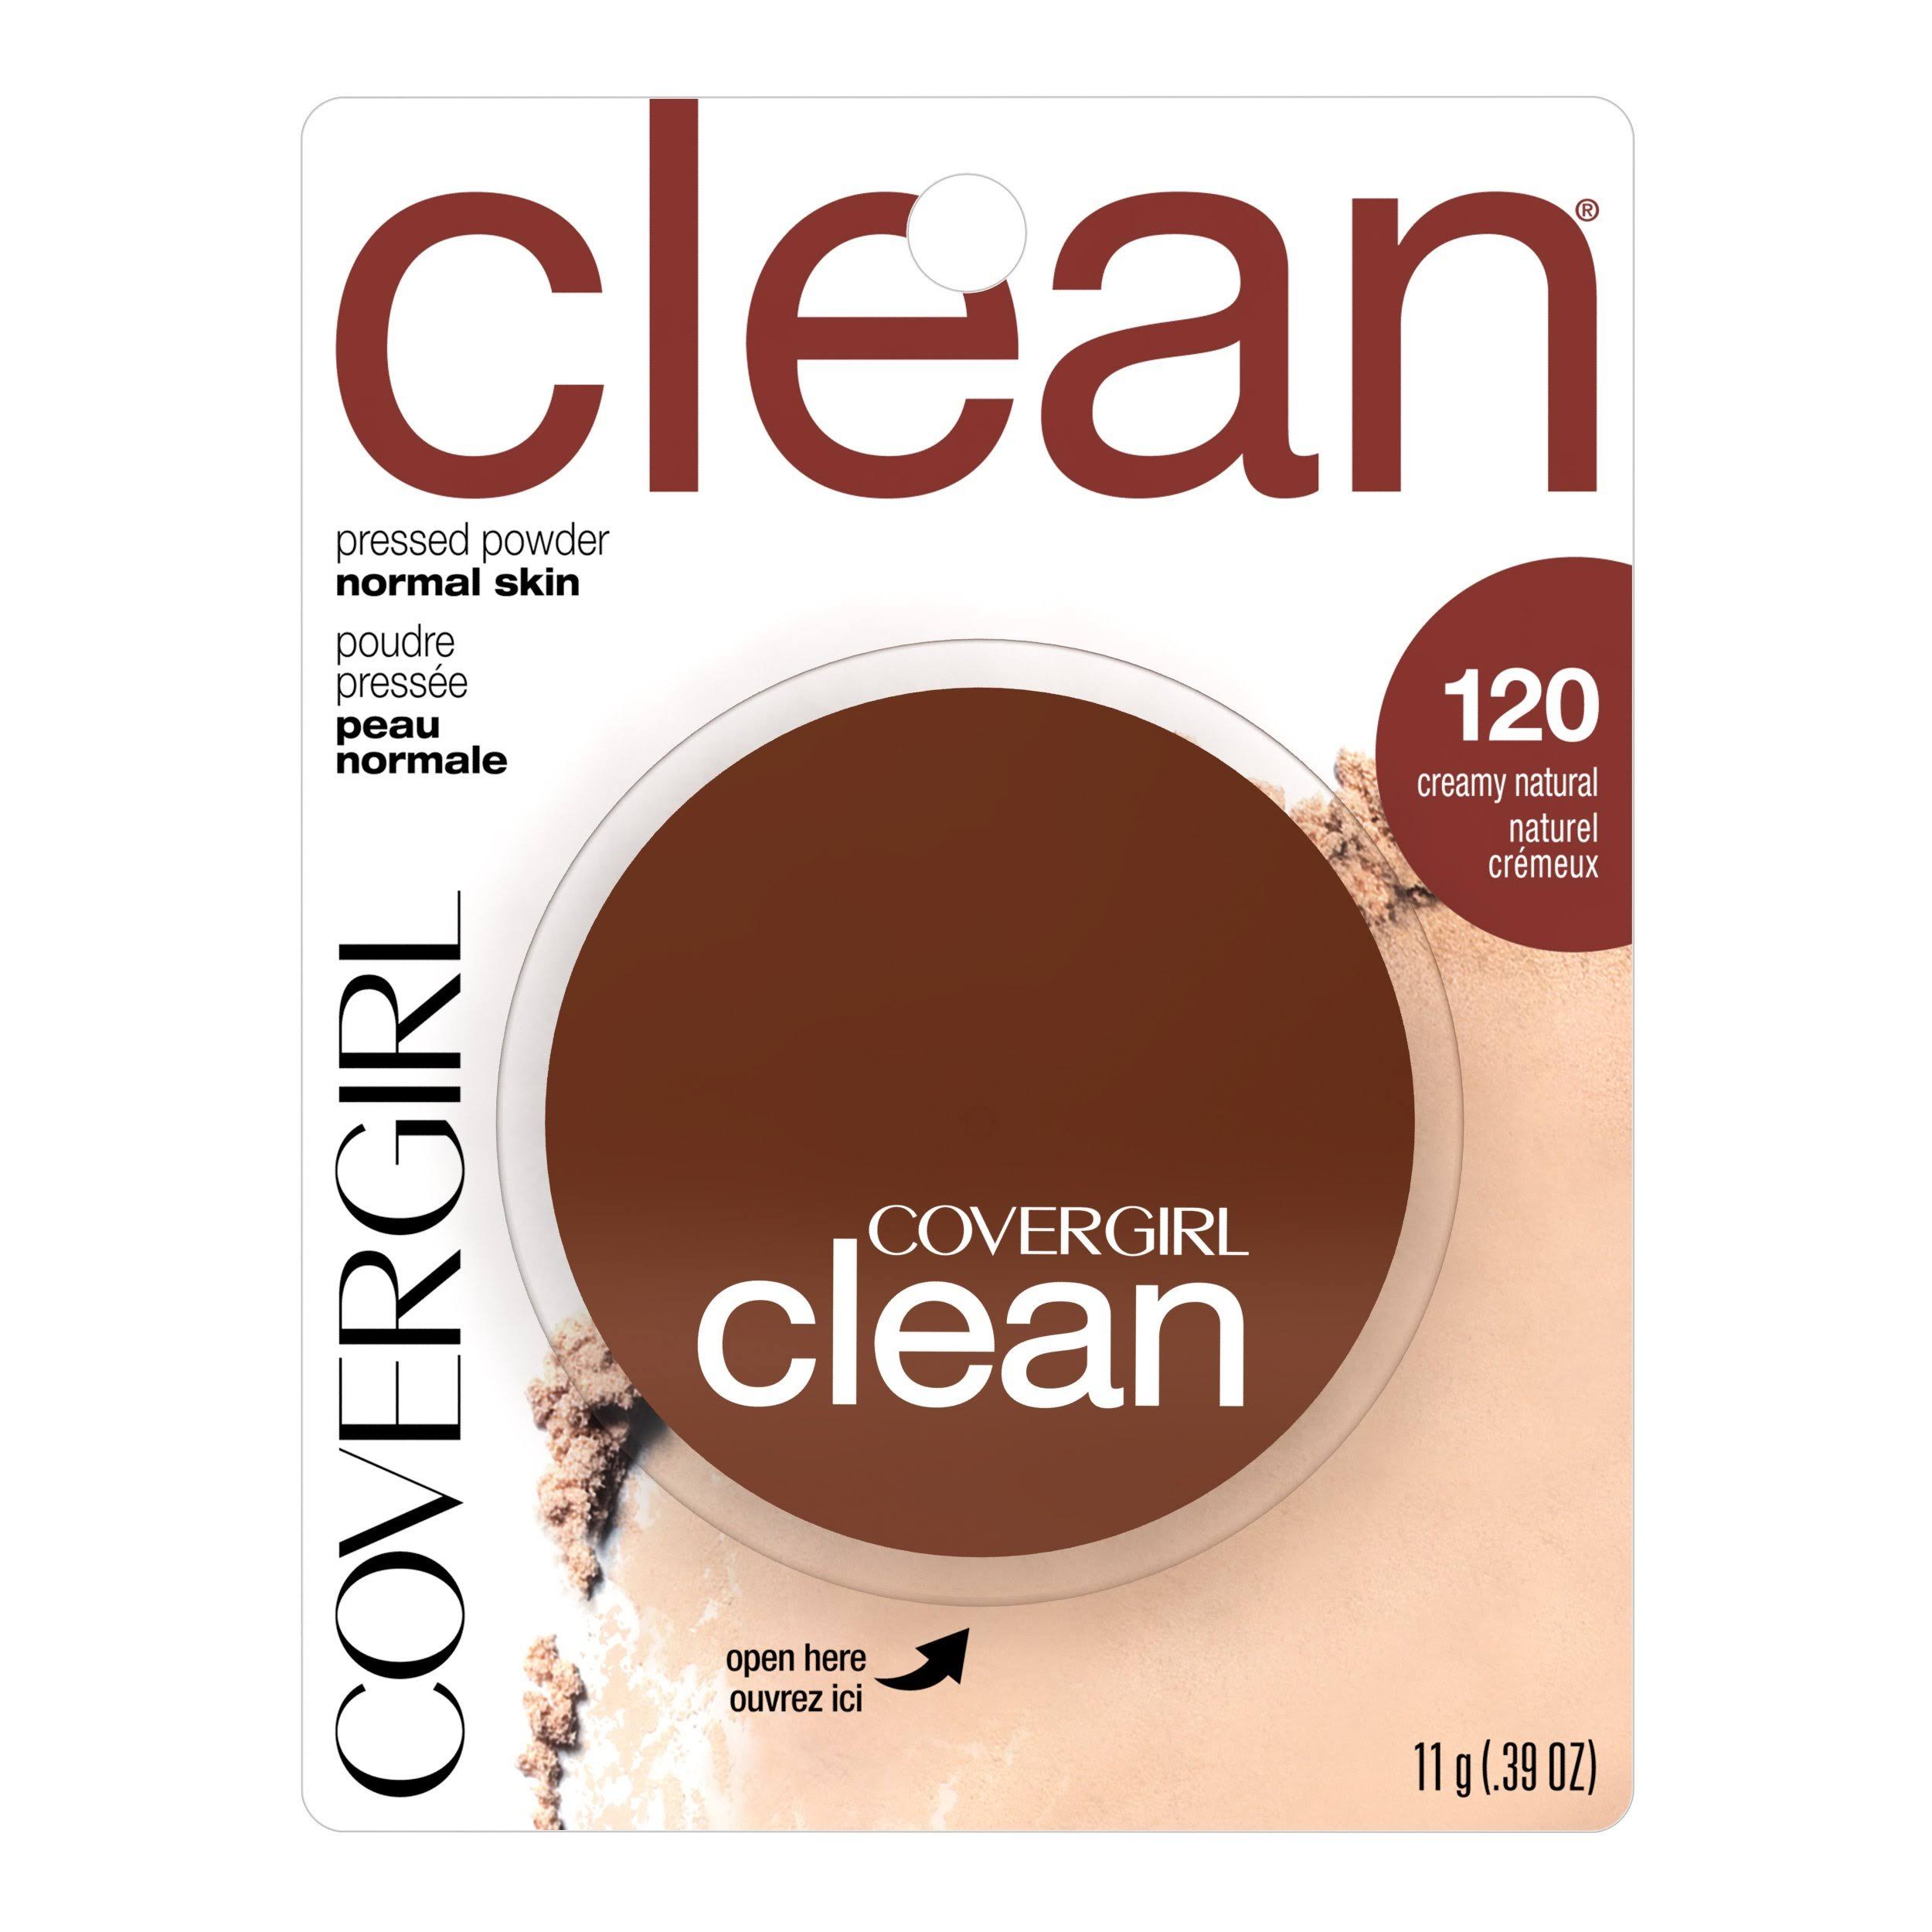 Covergirl Clean Pressed Powder Normal Skin - 120 Creamy Natural